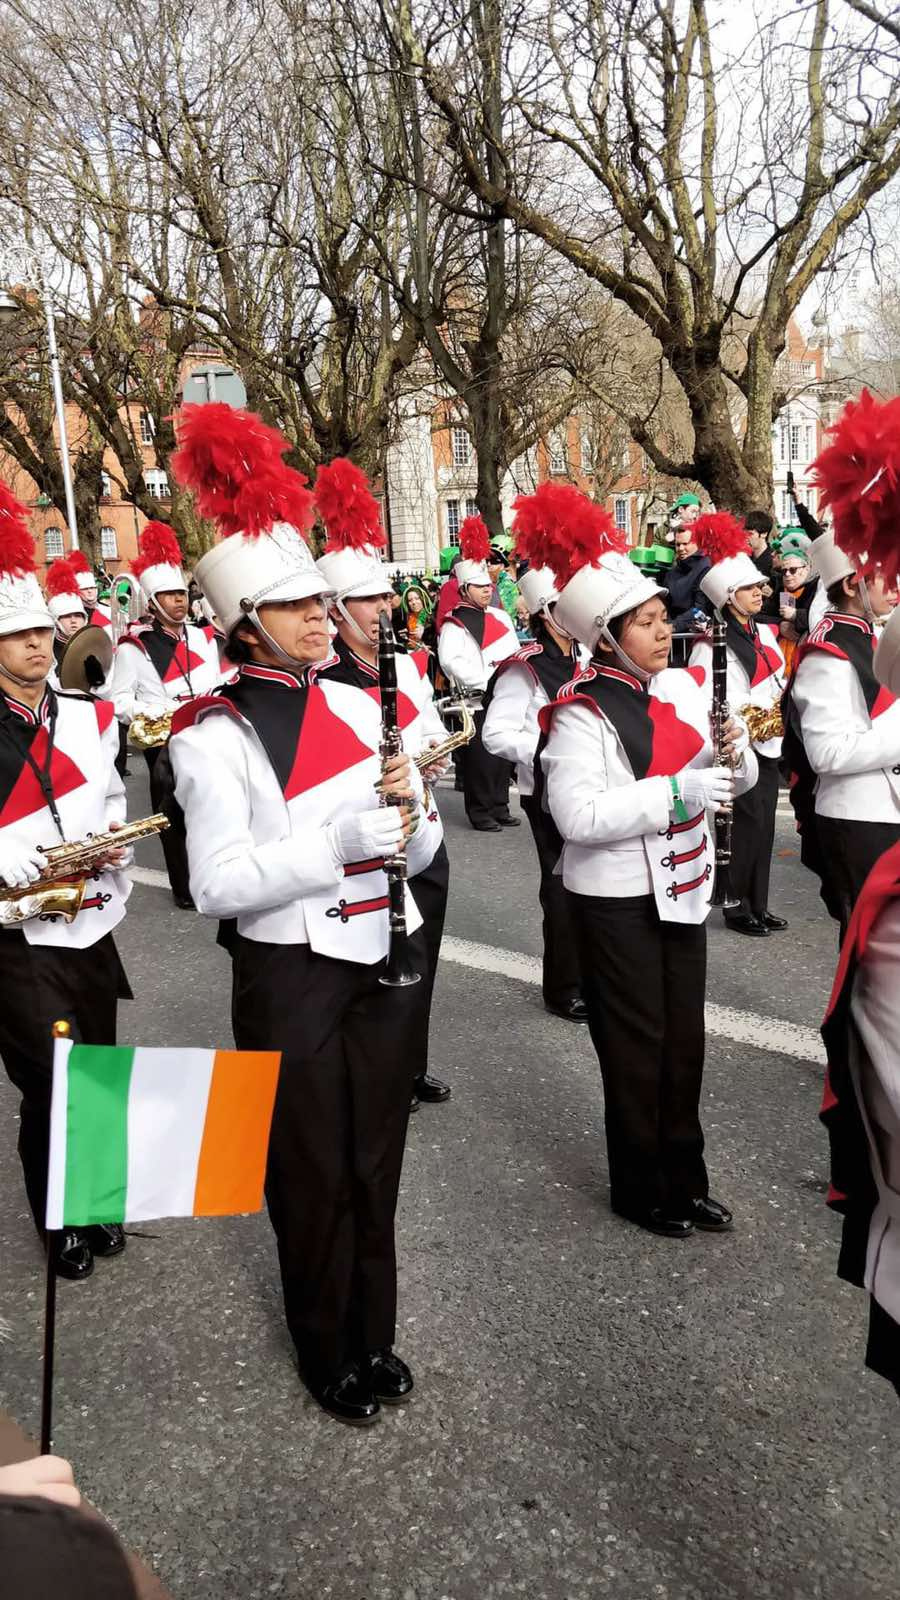 St Patricks Parade in Dublin, Ireland